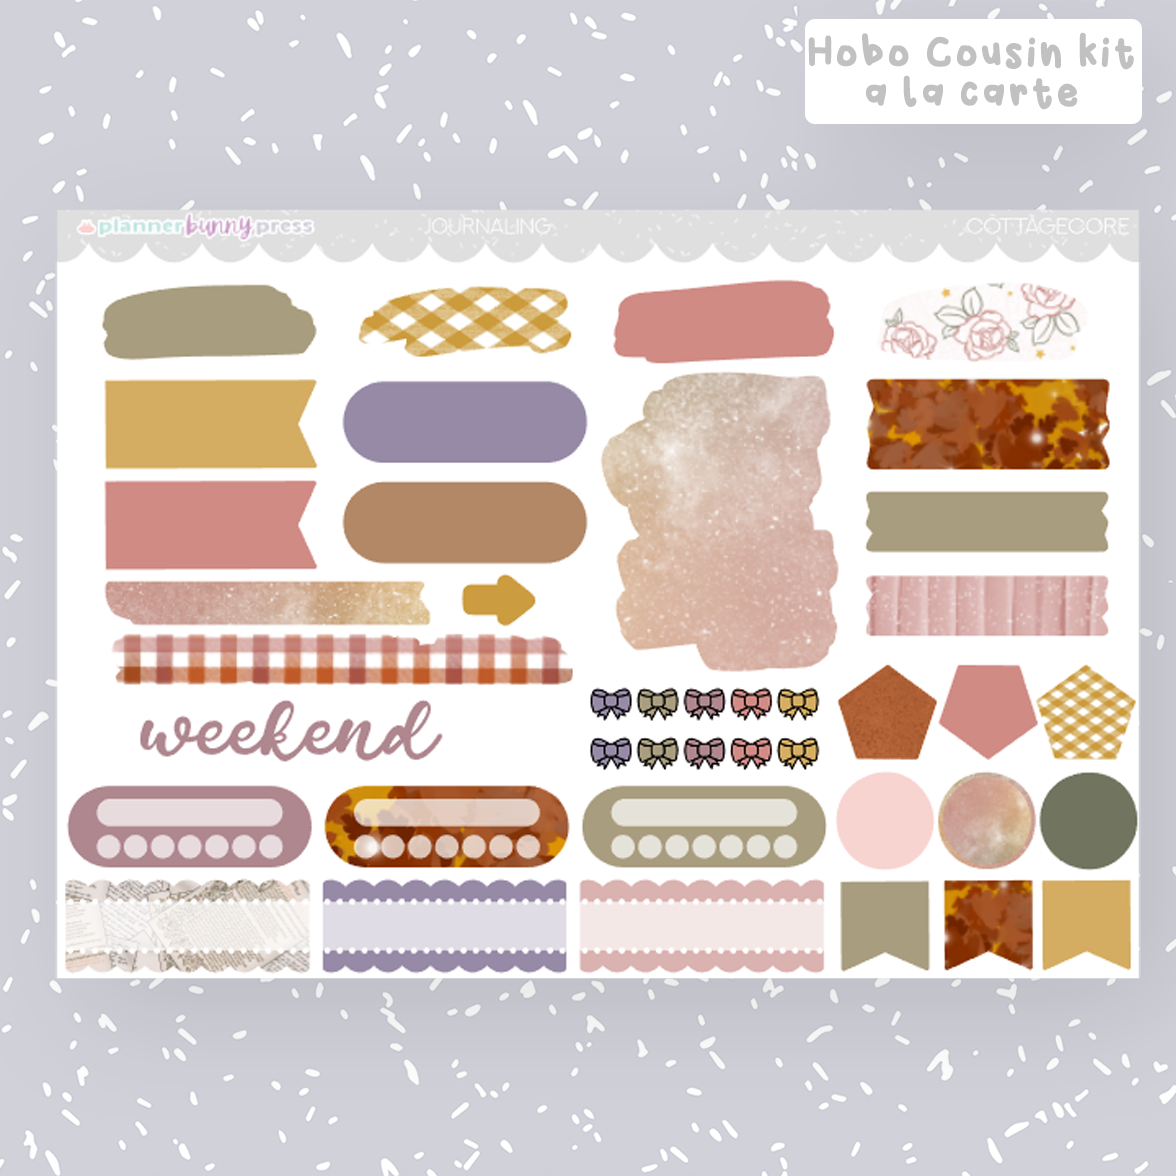 Cottagecore | Hobonichi Cousin Sticker Kit